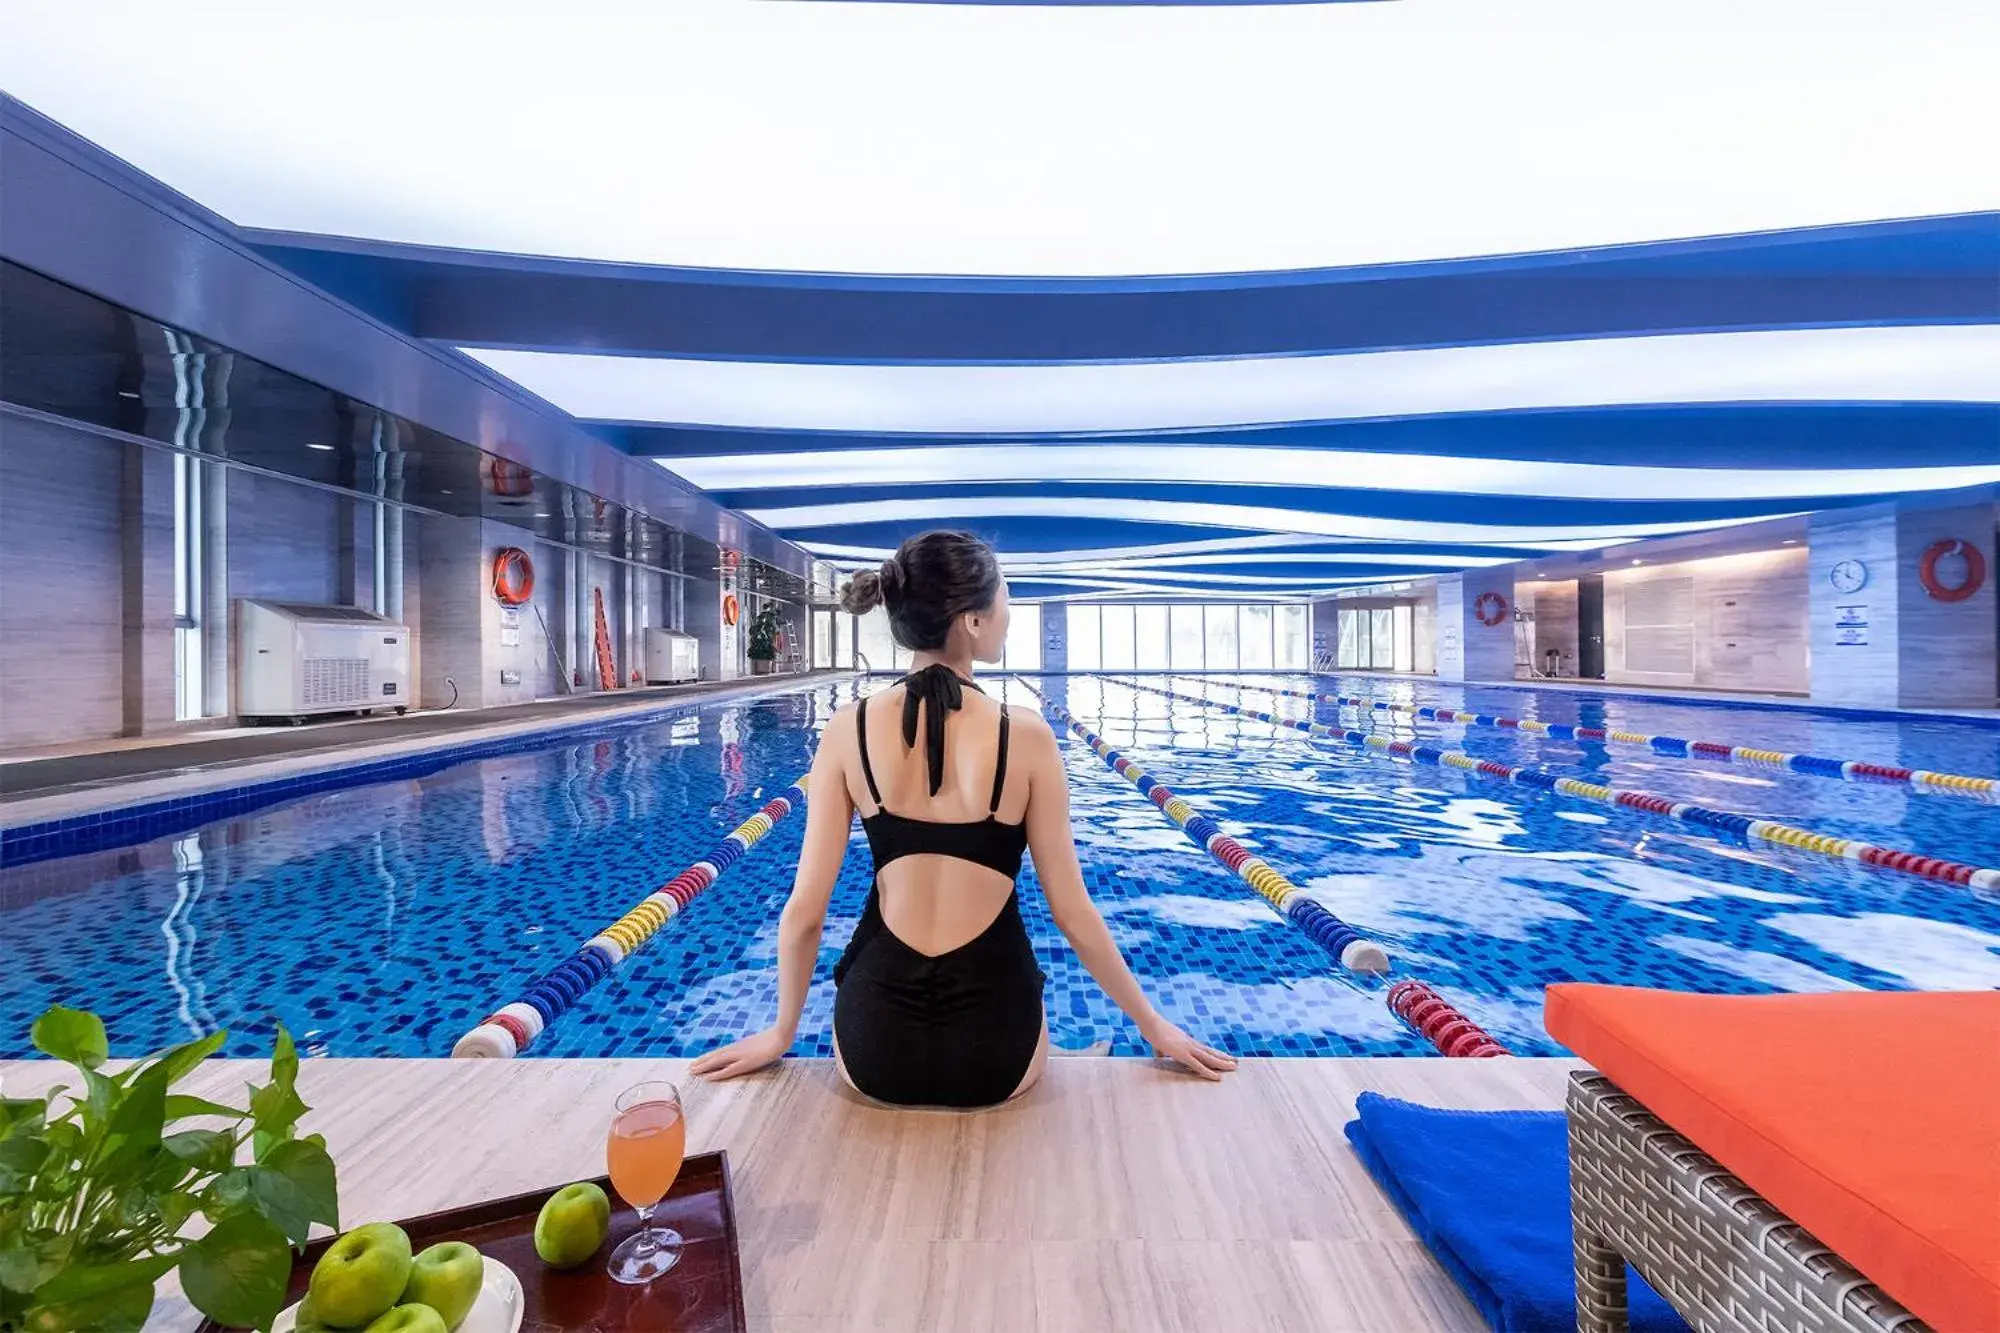 Swimming Pool in Howard Johnson Hi - Tech Plaza Chengdu